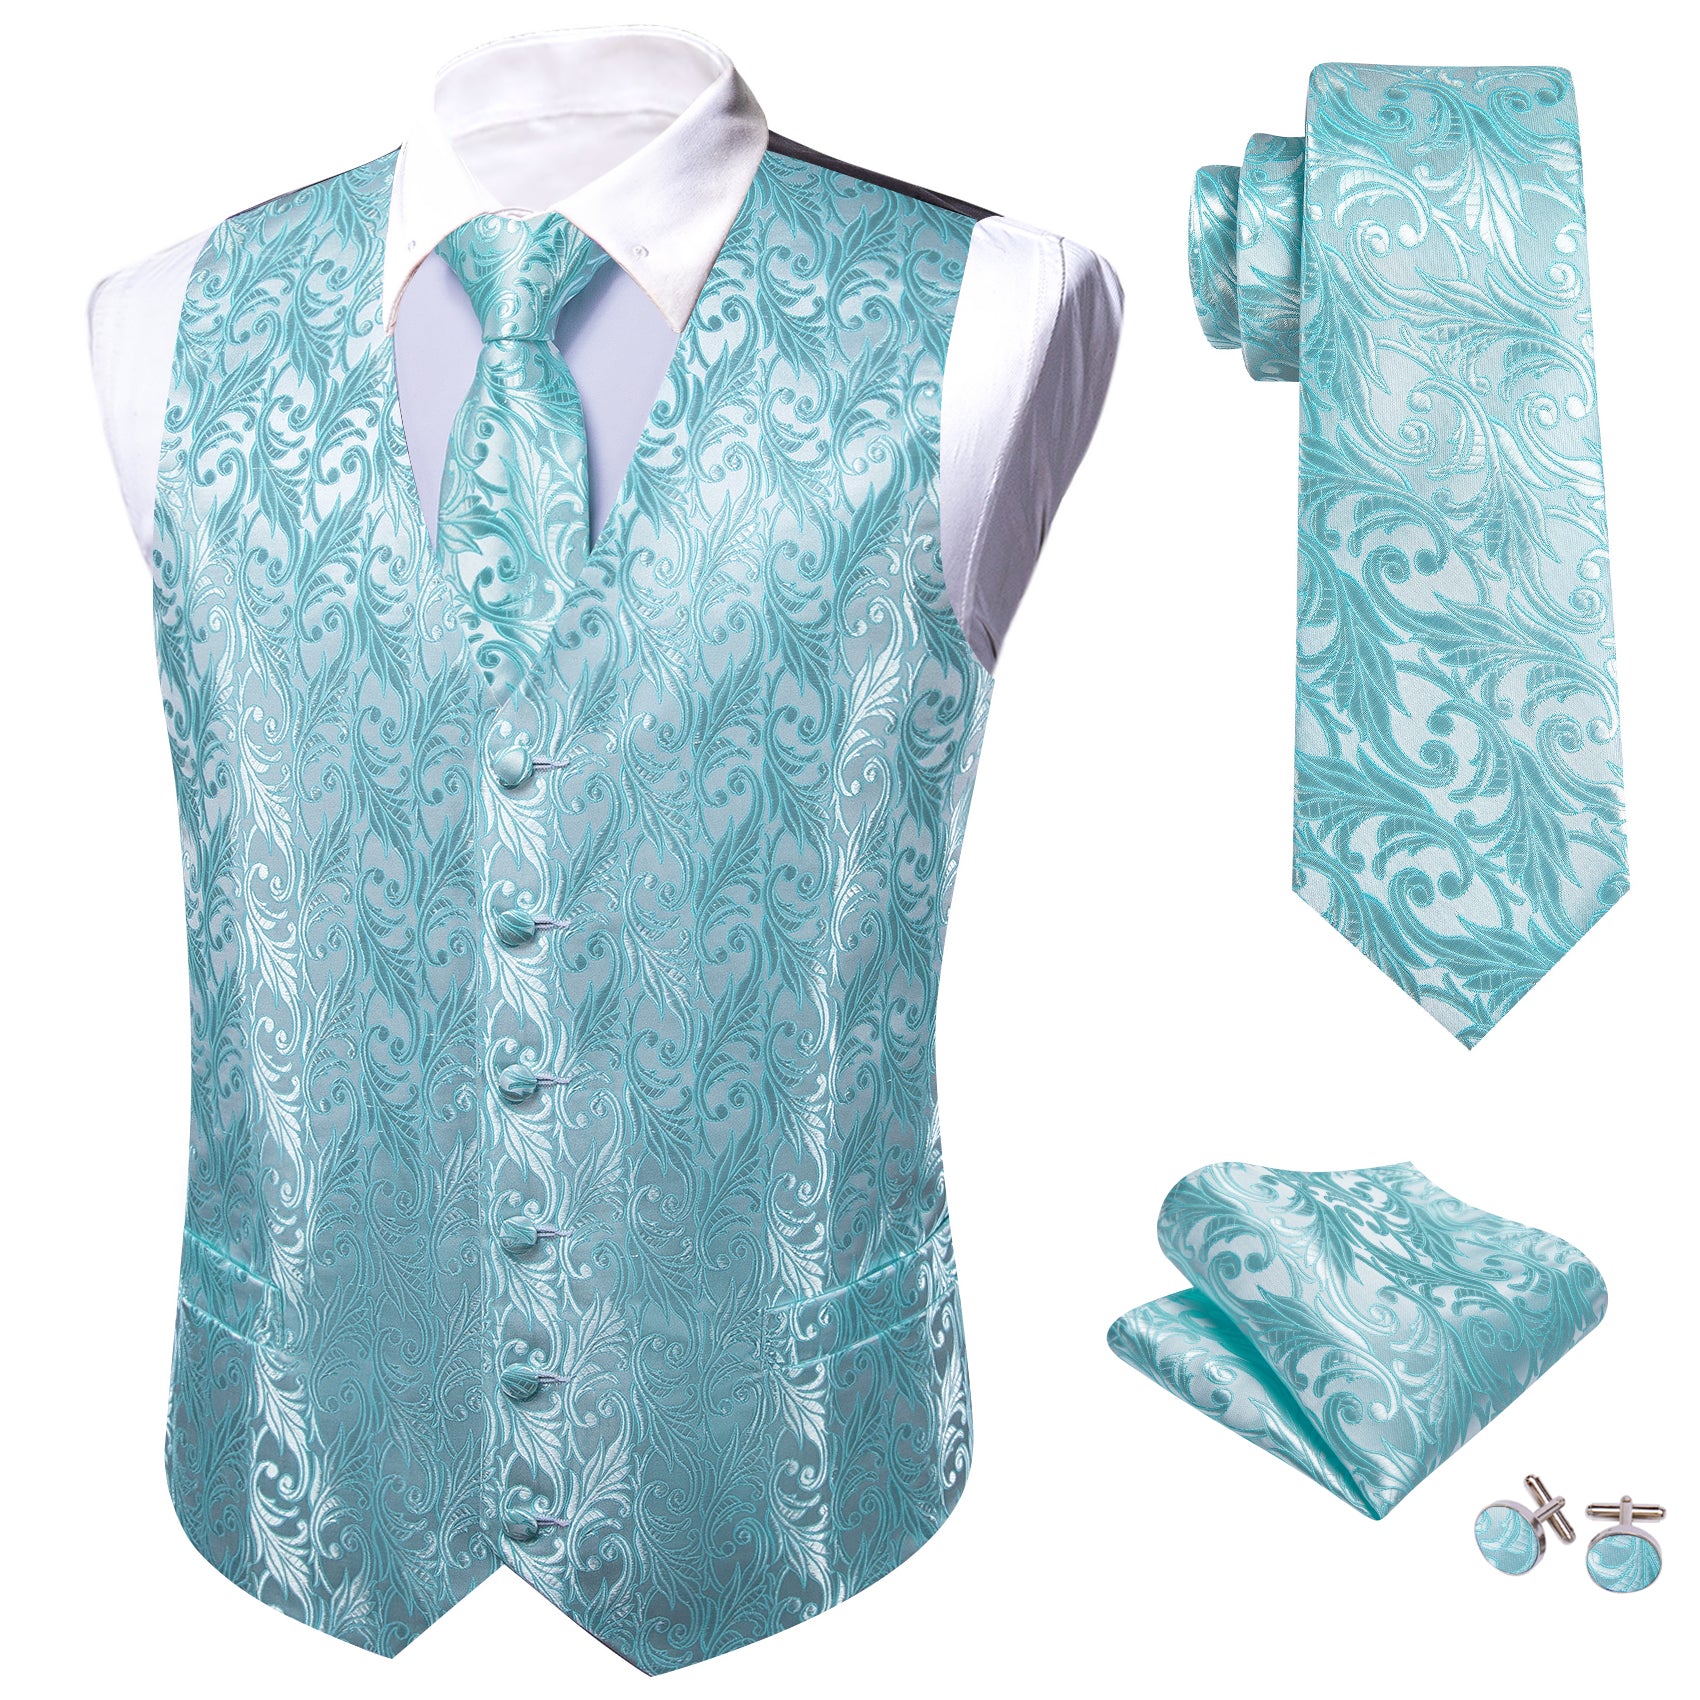 Barry.wang Men's Vest Aqua Floral Silk Vest Tie Hanky Cufflinks Set New Fashion